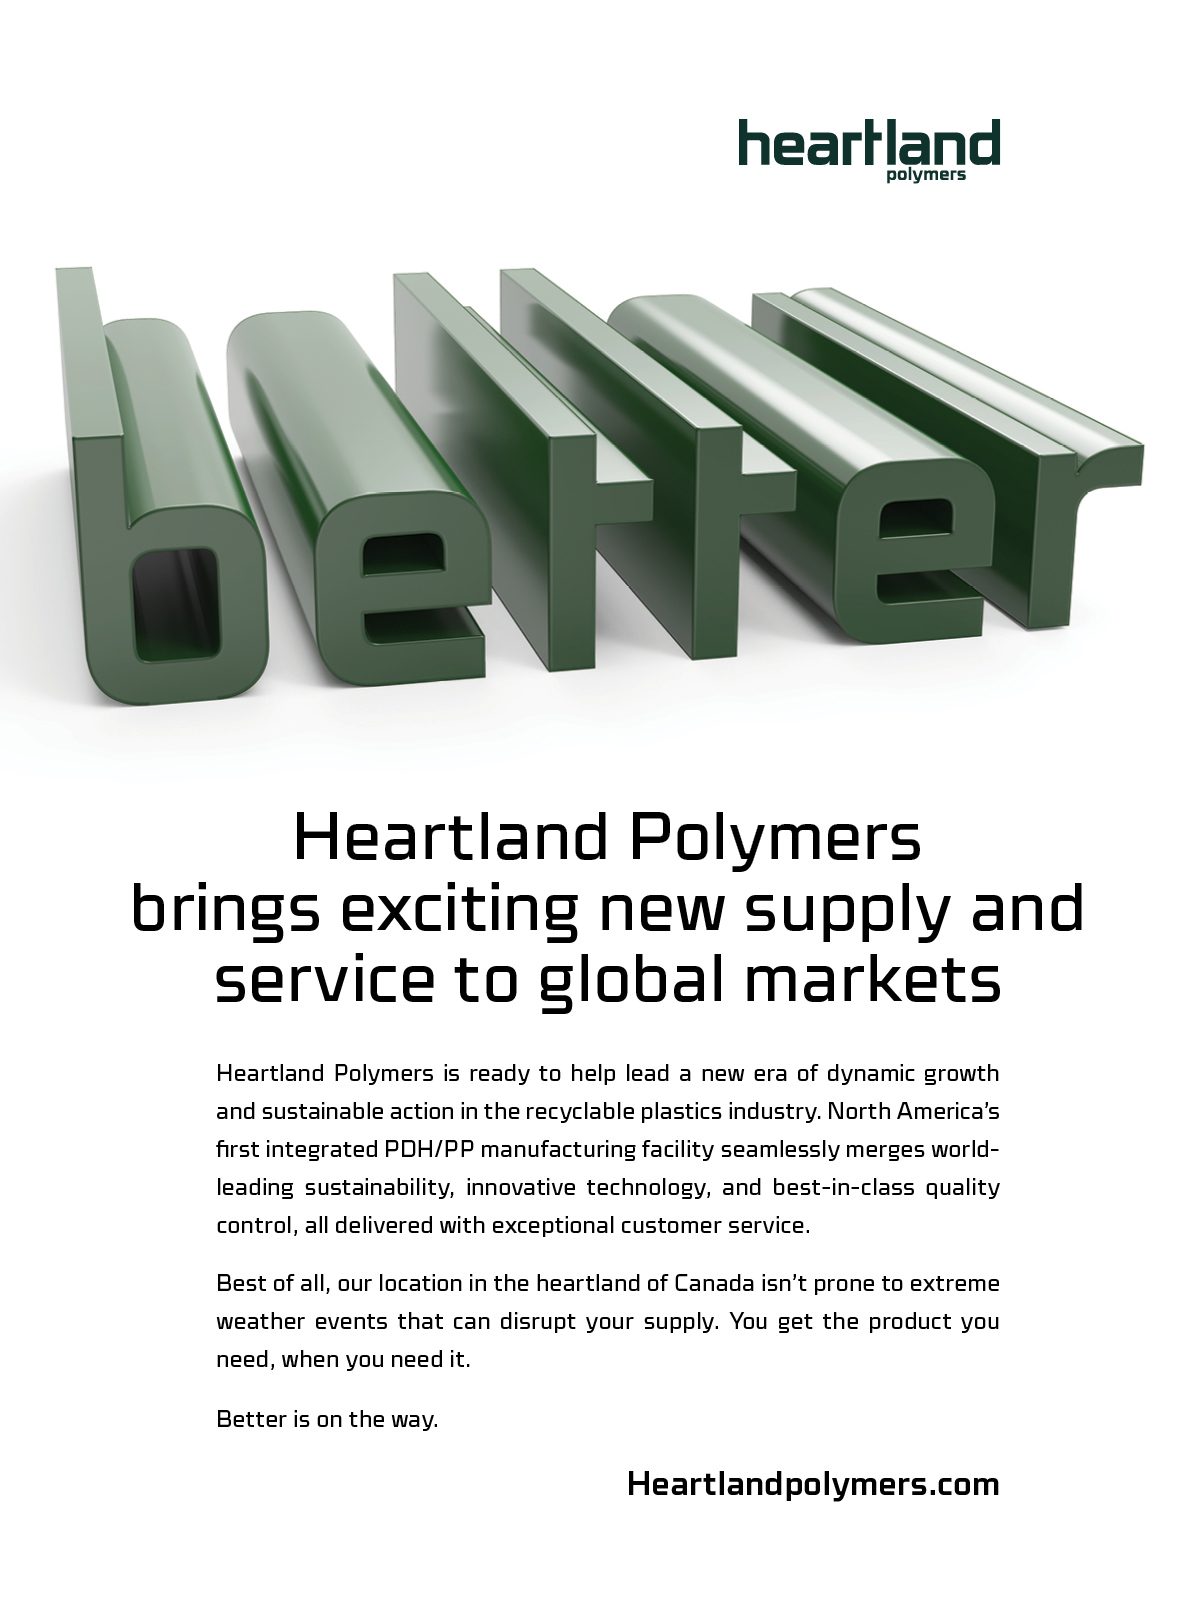 Ad: Heartland Polymers